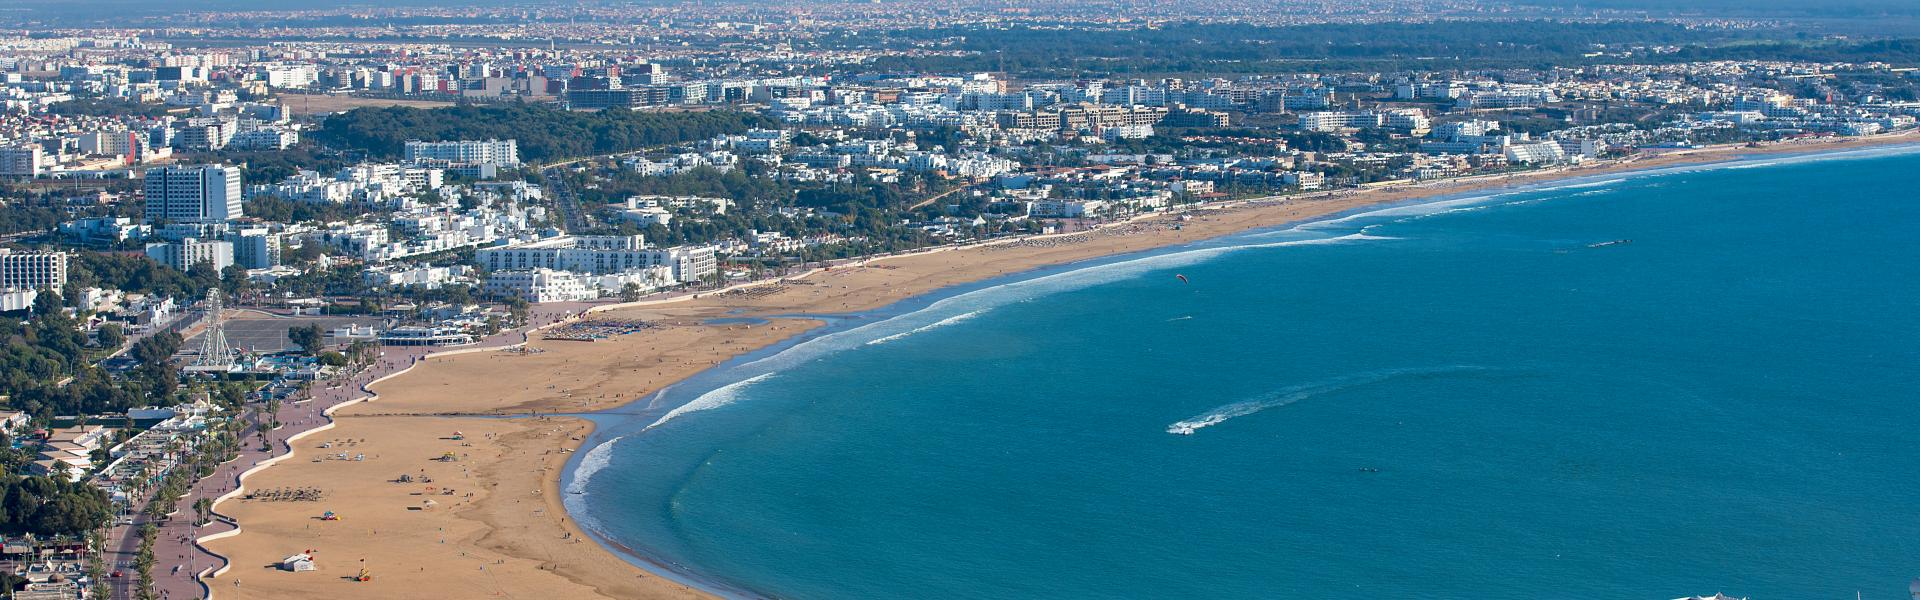 Noclegi i apartamenty wakacyjne w Agadirze - Casamundo